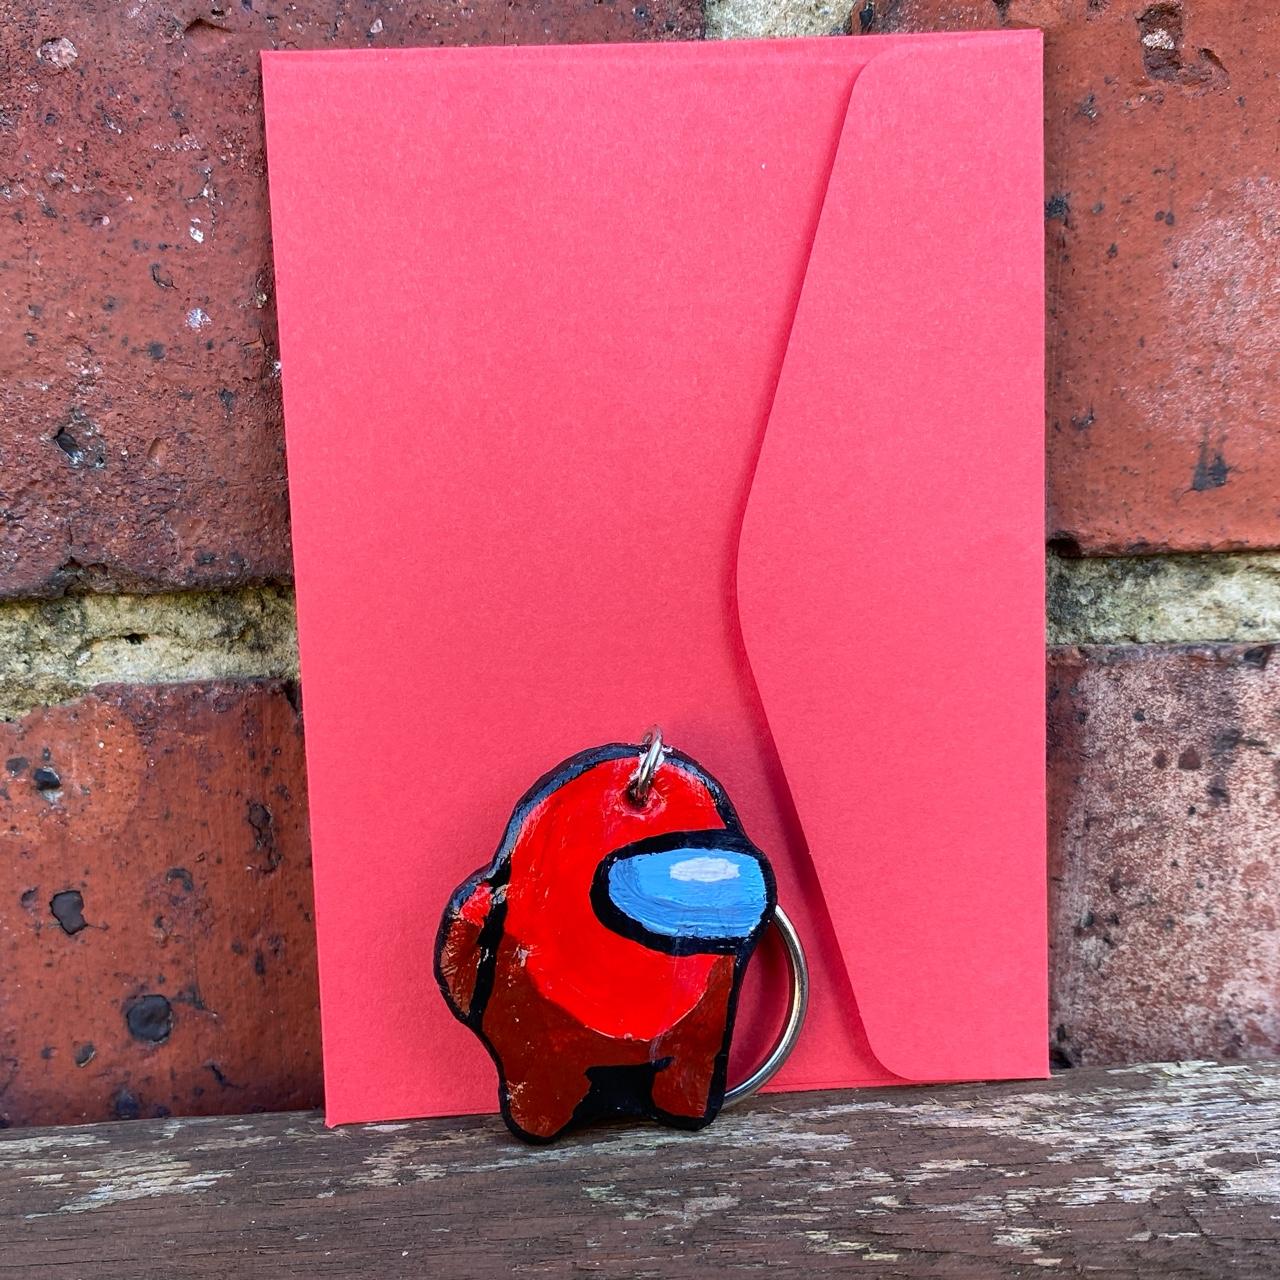 red uno reverse card earrings - Depop